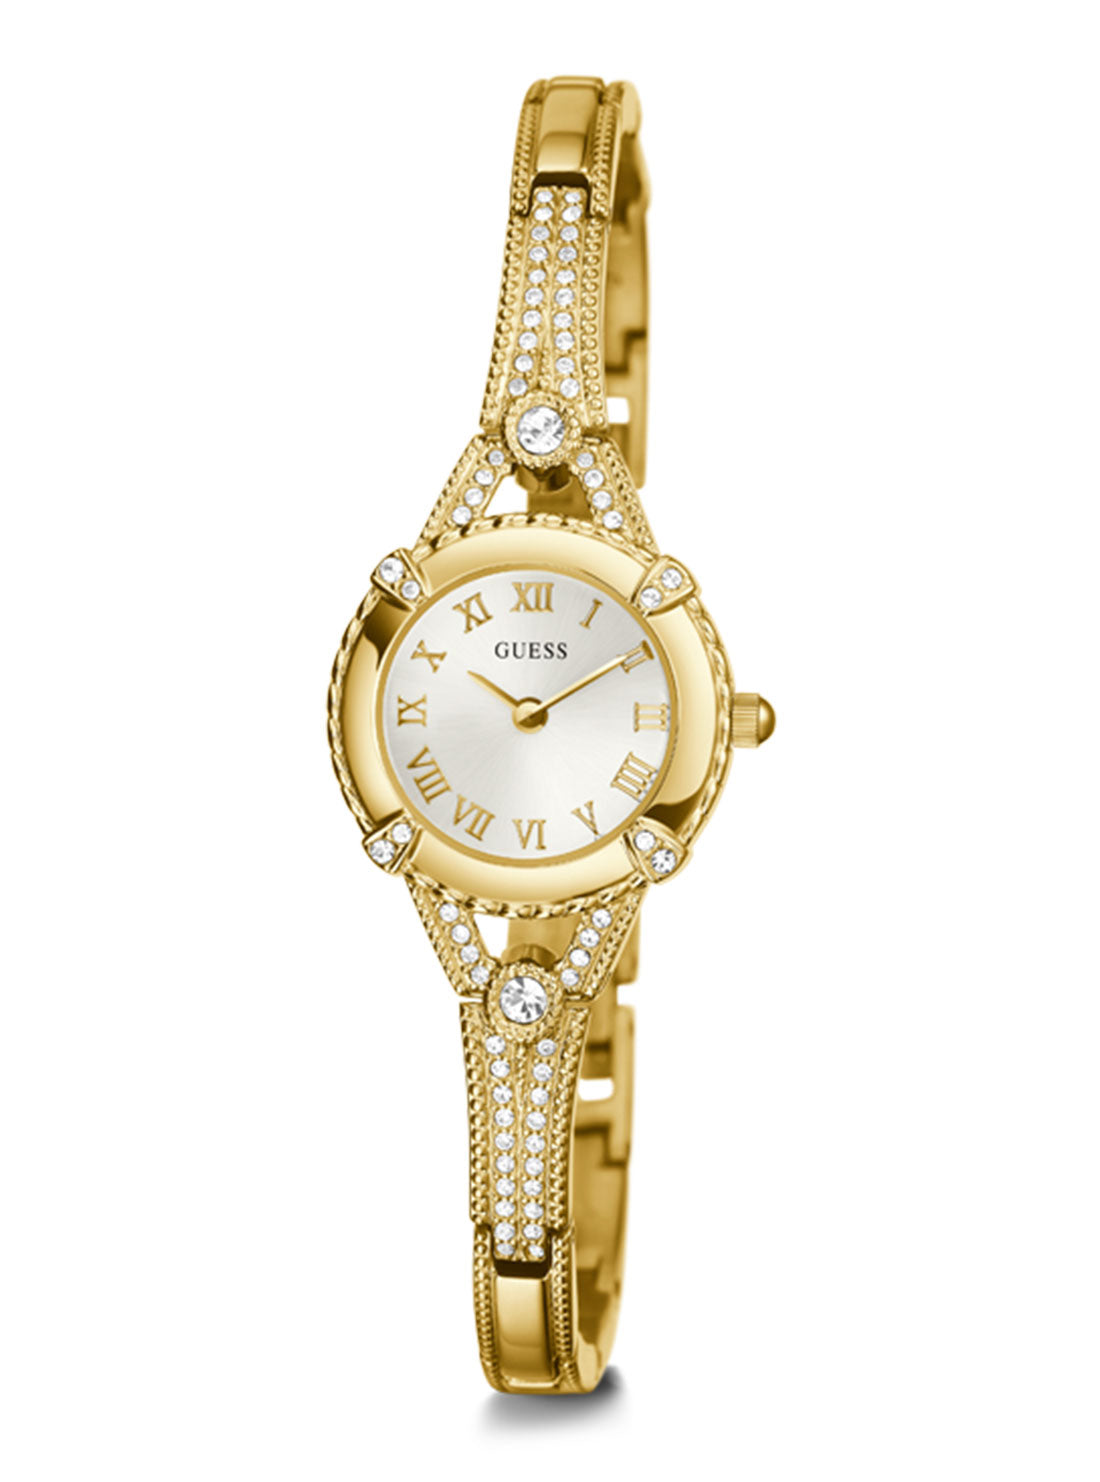 GUESS Women's Gold Angelic Glitz Watch W0135L2 Full View